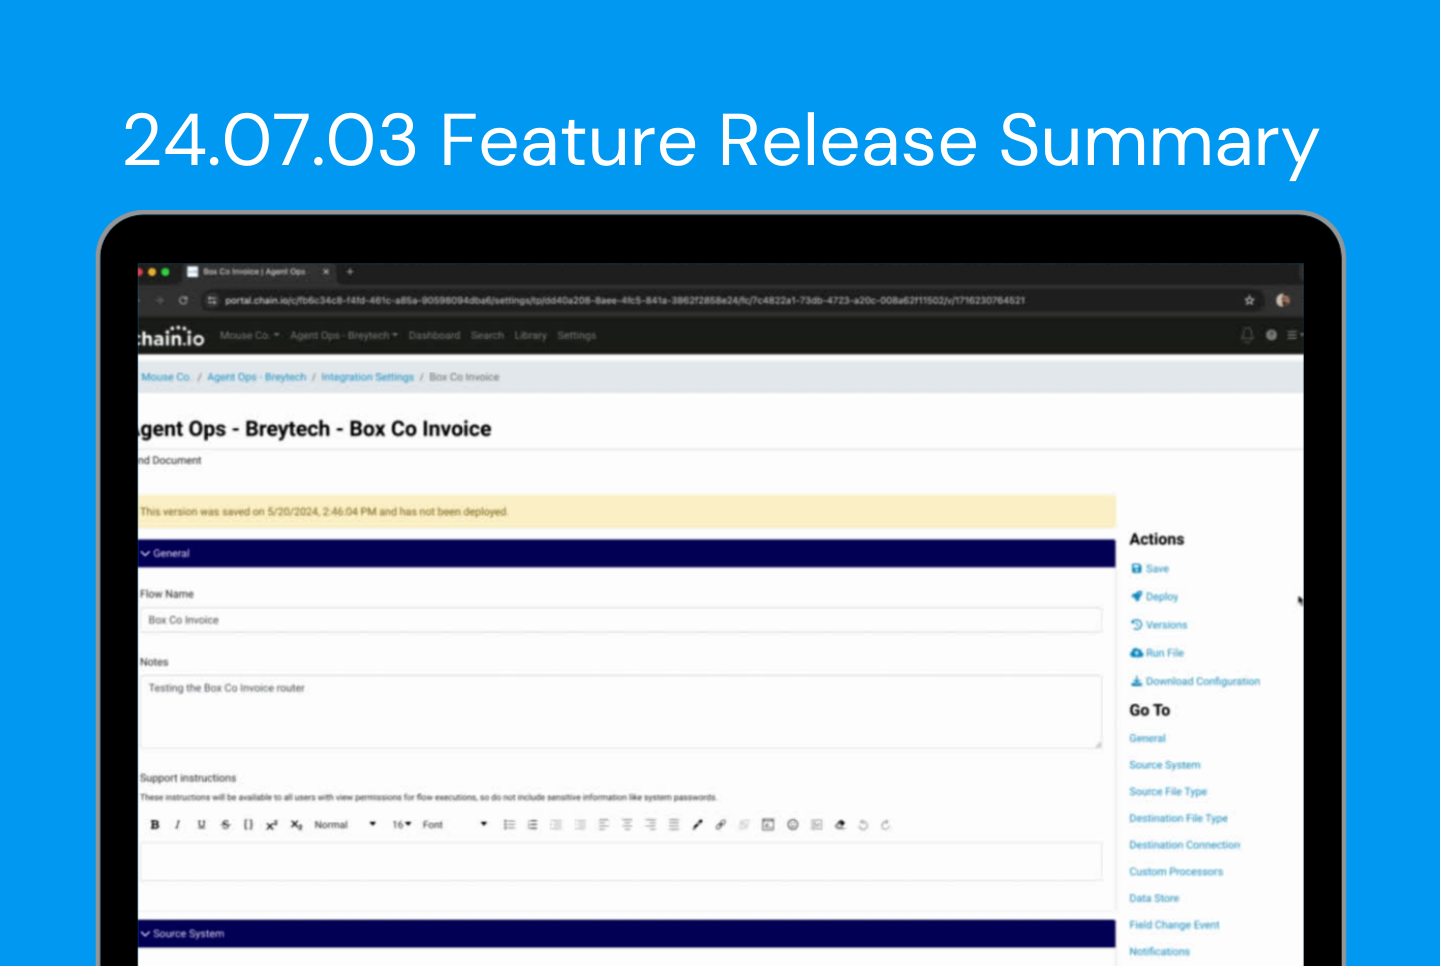 Chain.io 24.07.03 Feature Release Summary